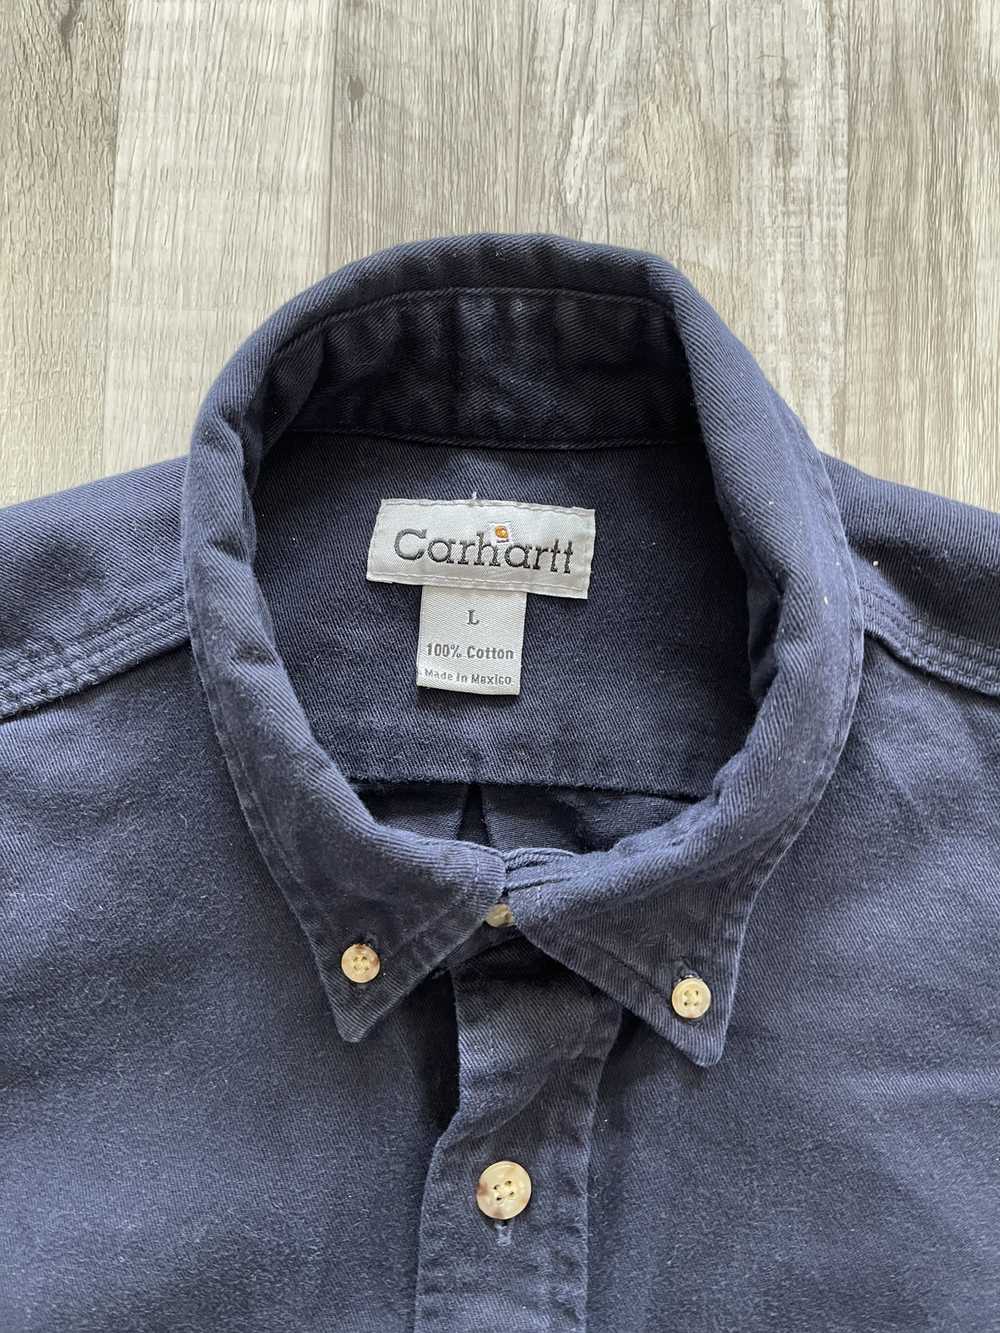 Carhartt Heavyweight Overshirt - image 2